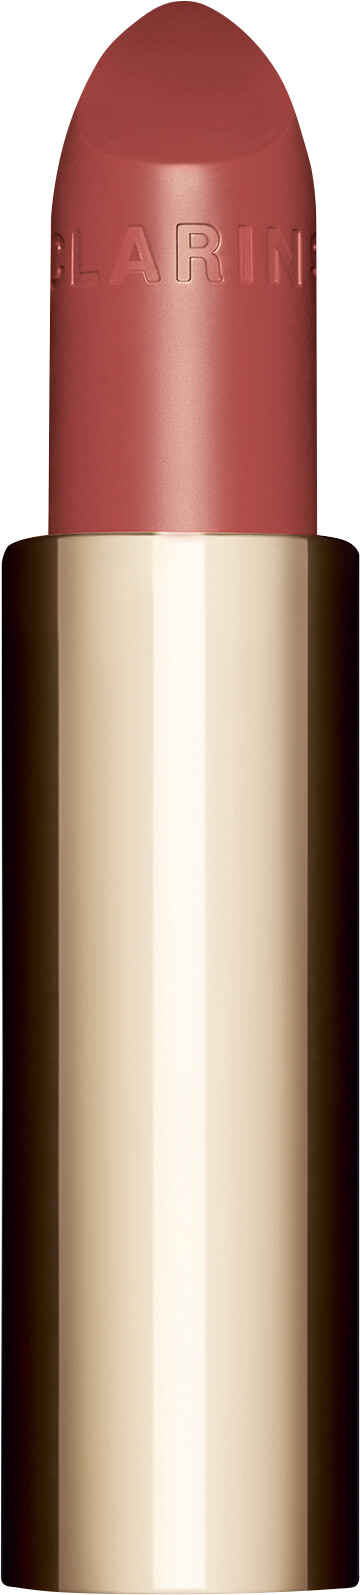 Clarins Joli Rouge Lipstick Refill 3.5g 705 - Soft Berry